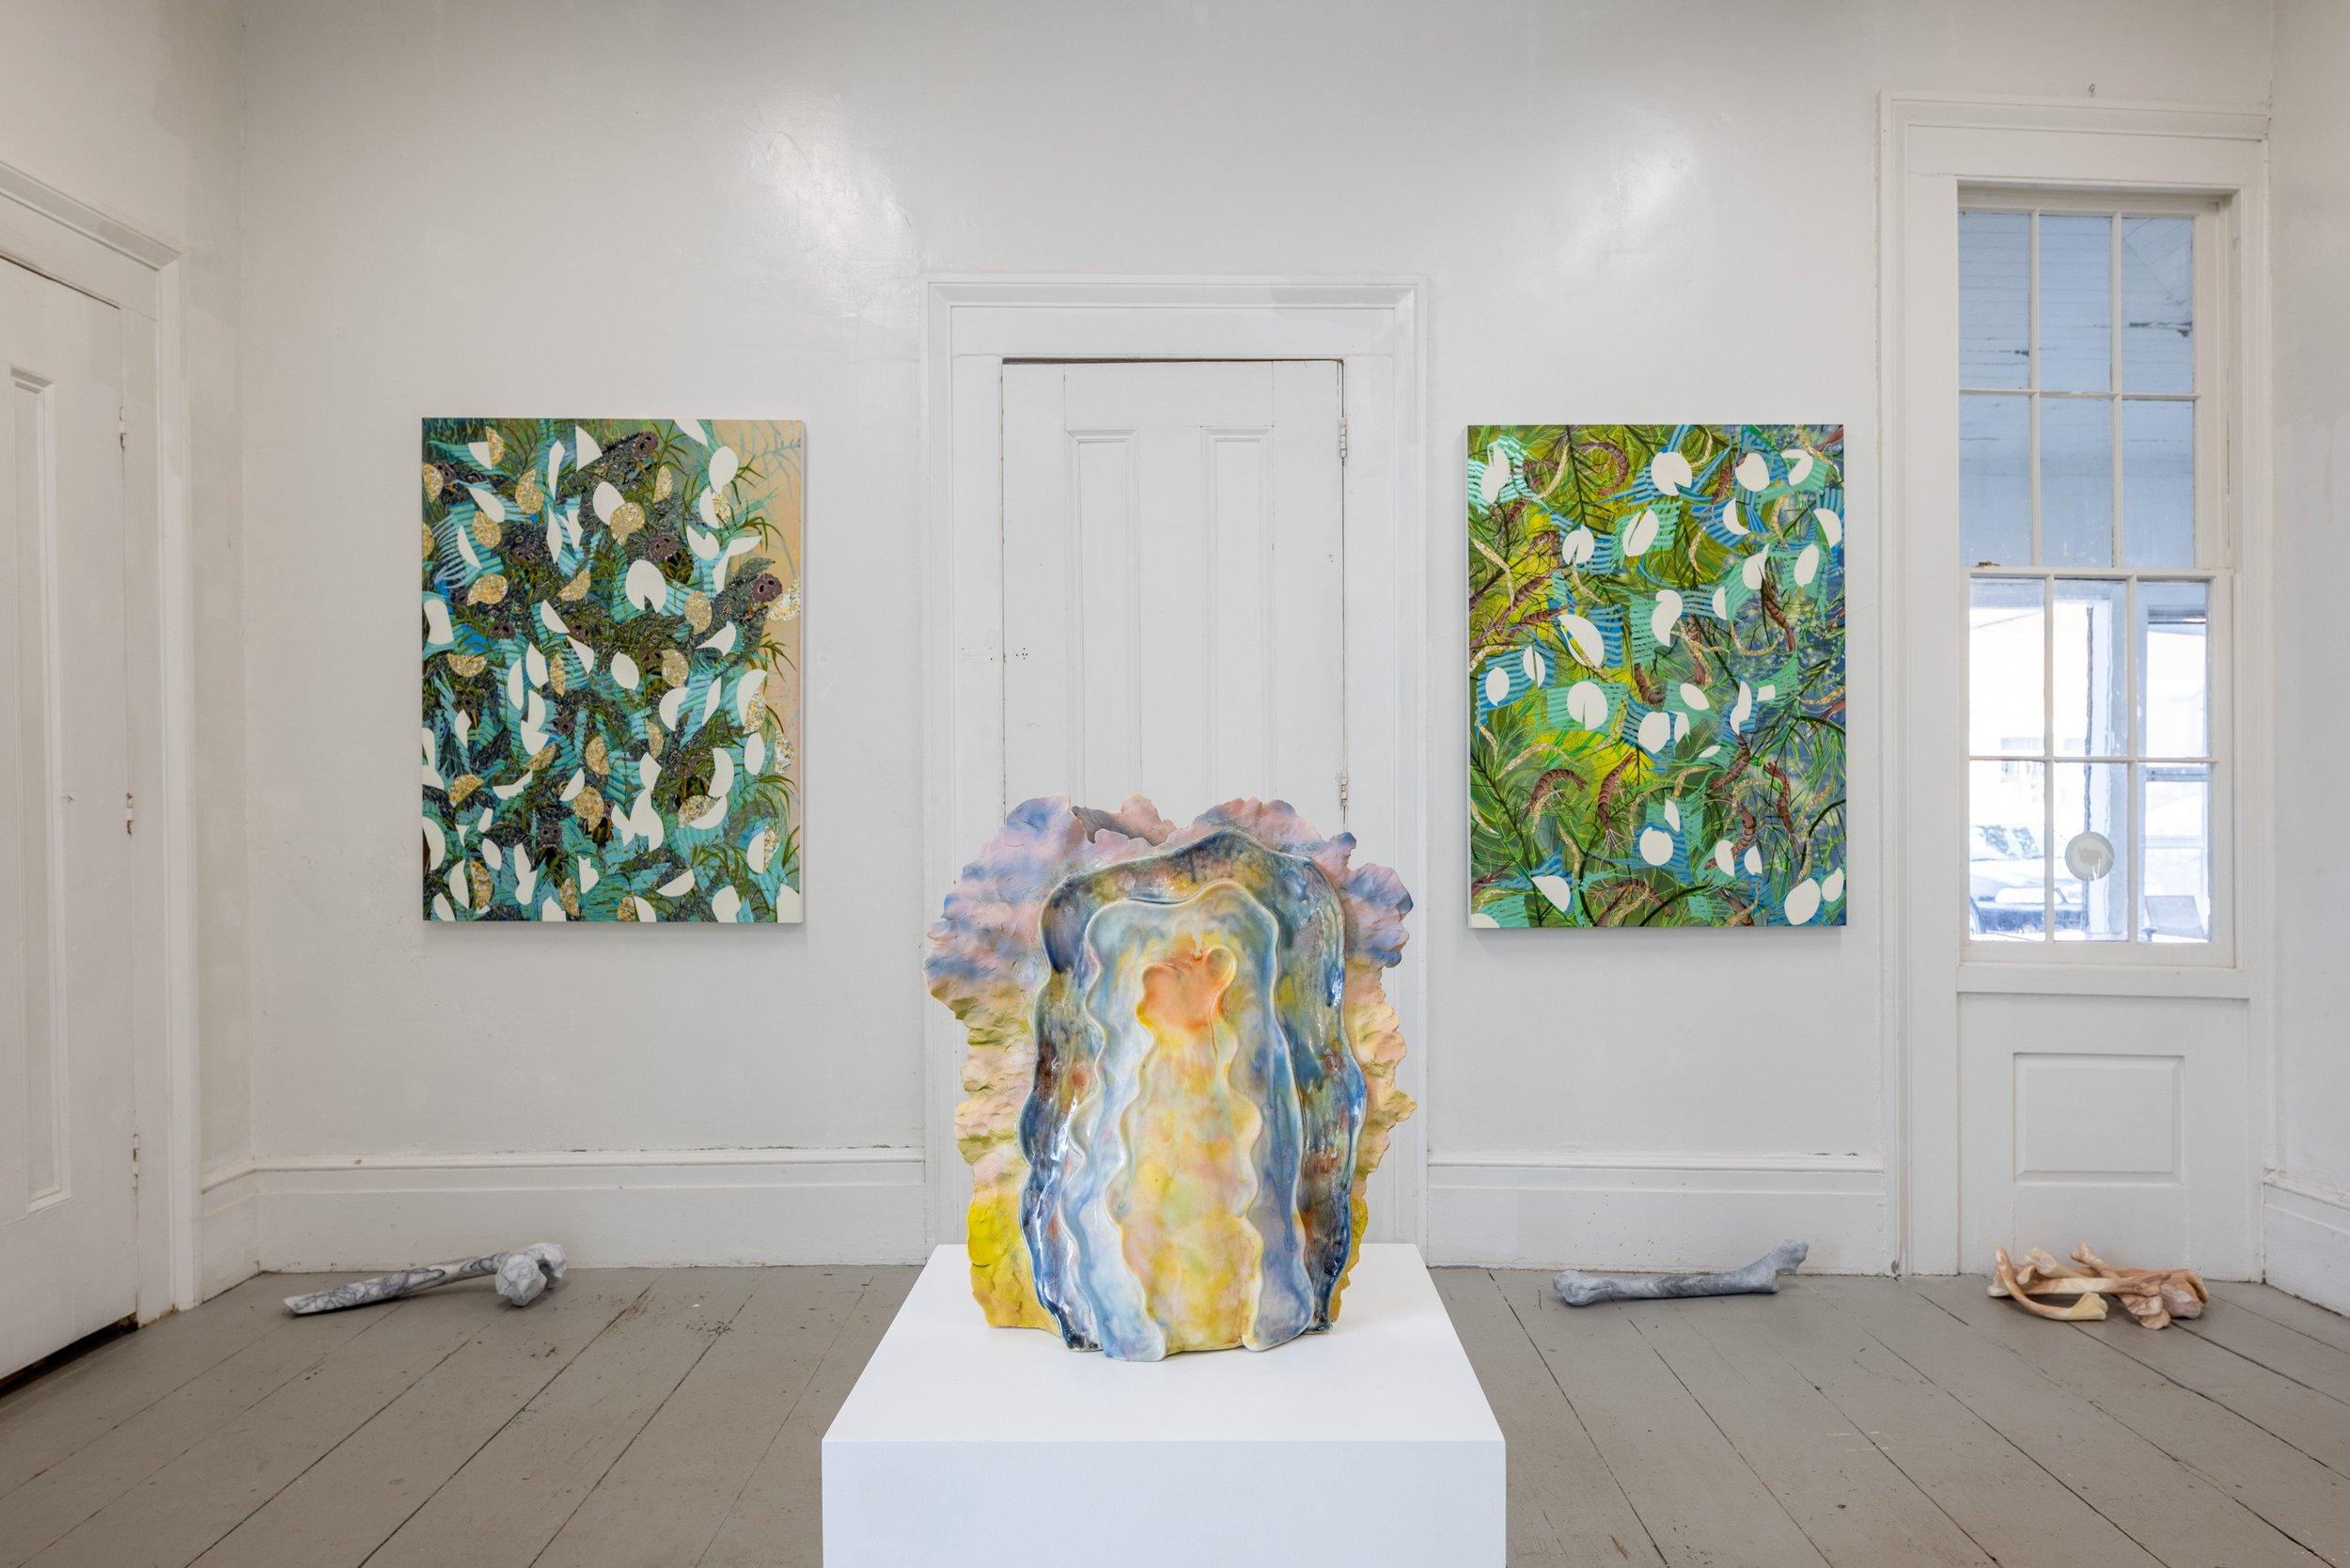 (center) Christina Bolt, Source Energy Vessel, 2020, Glazed porcelain, 17 x 17 x 6.5 inches